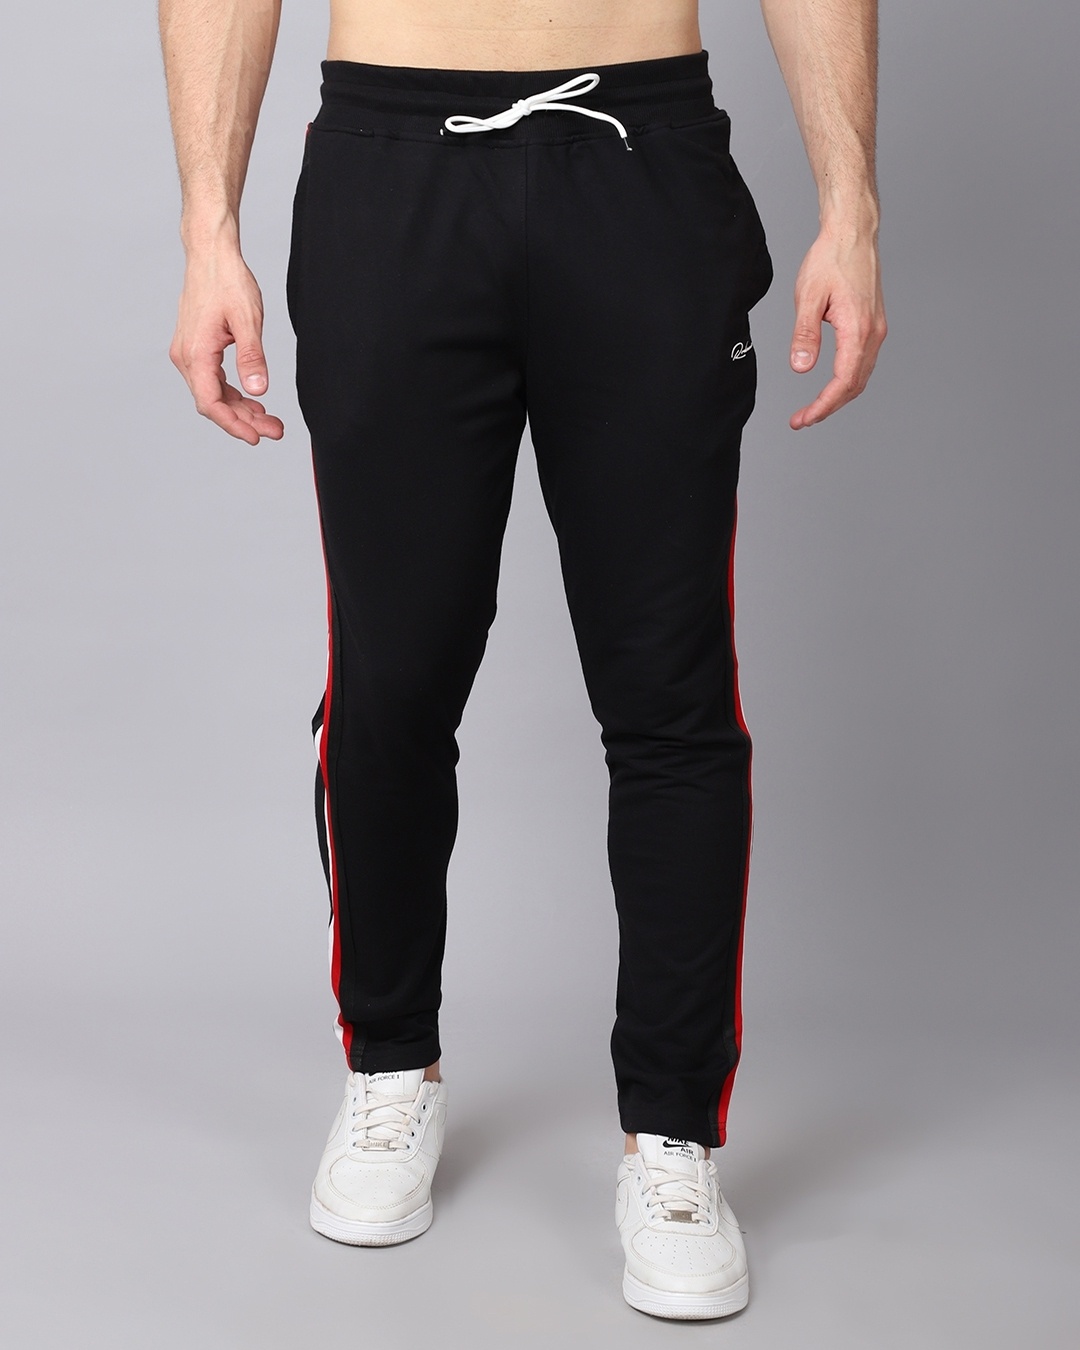 Buy Men's Black Striped Slim Fit Track Pants Online at Bewakoof